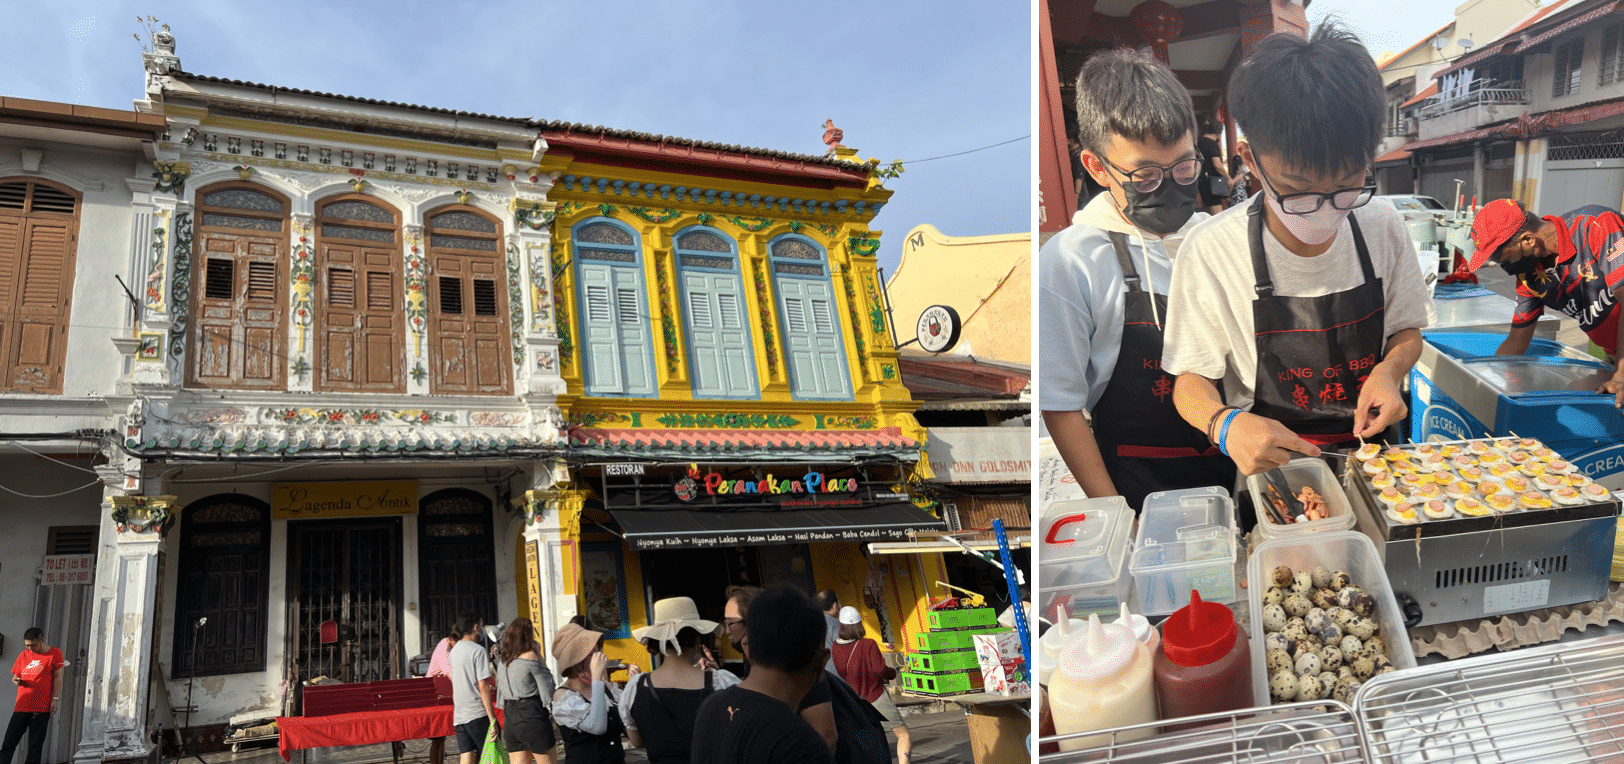 villes a visiter en malaisie : malacca et son marche de street food de jonker walk